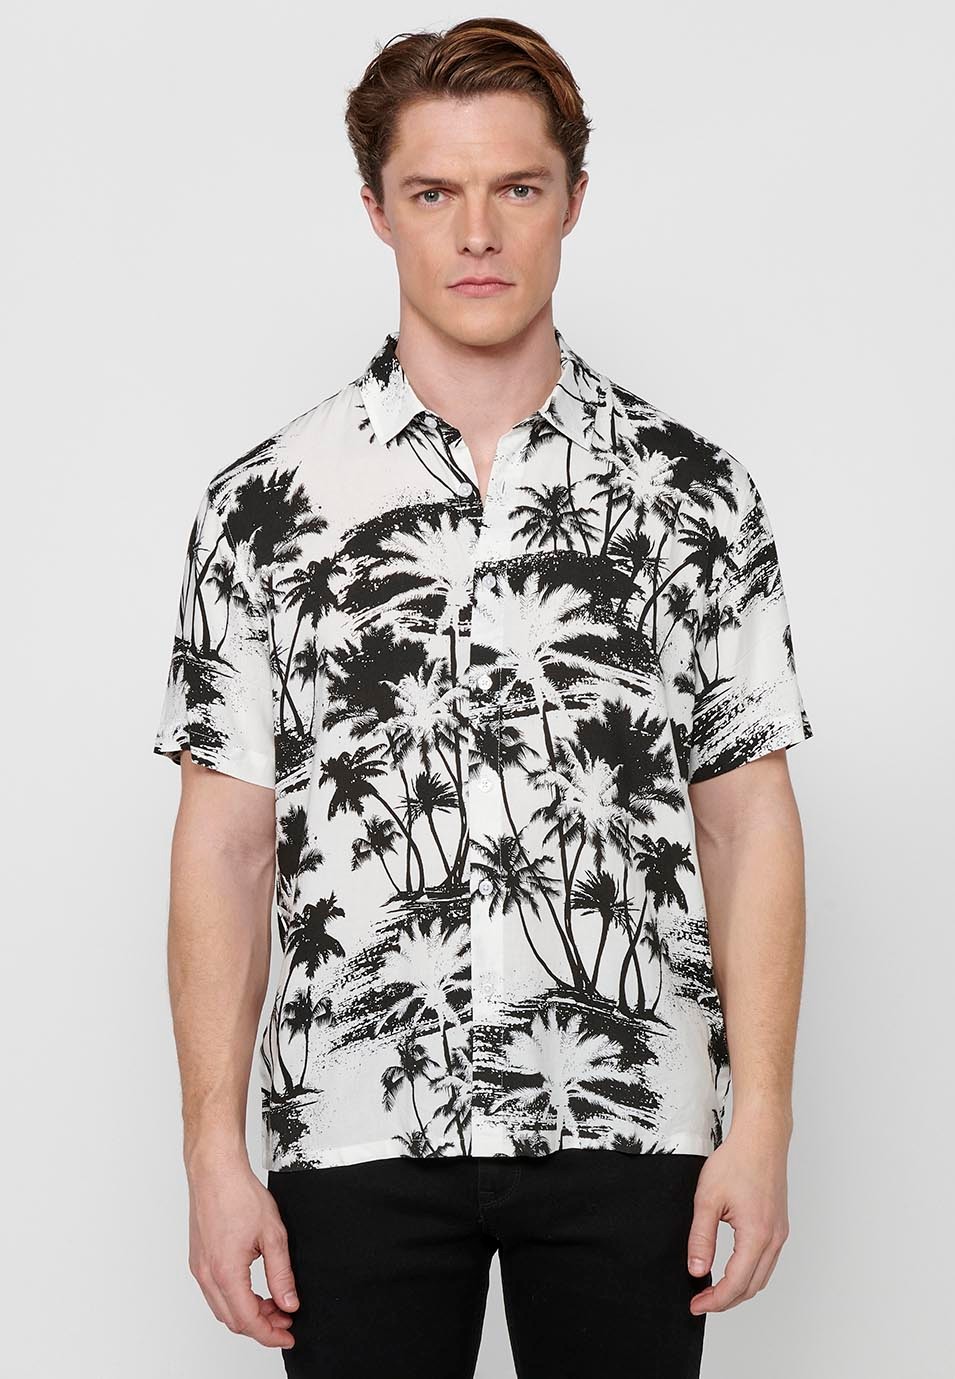 Black and white printed short sleeve shirt for men